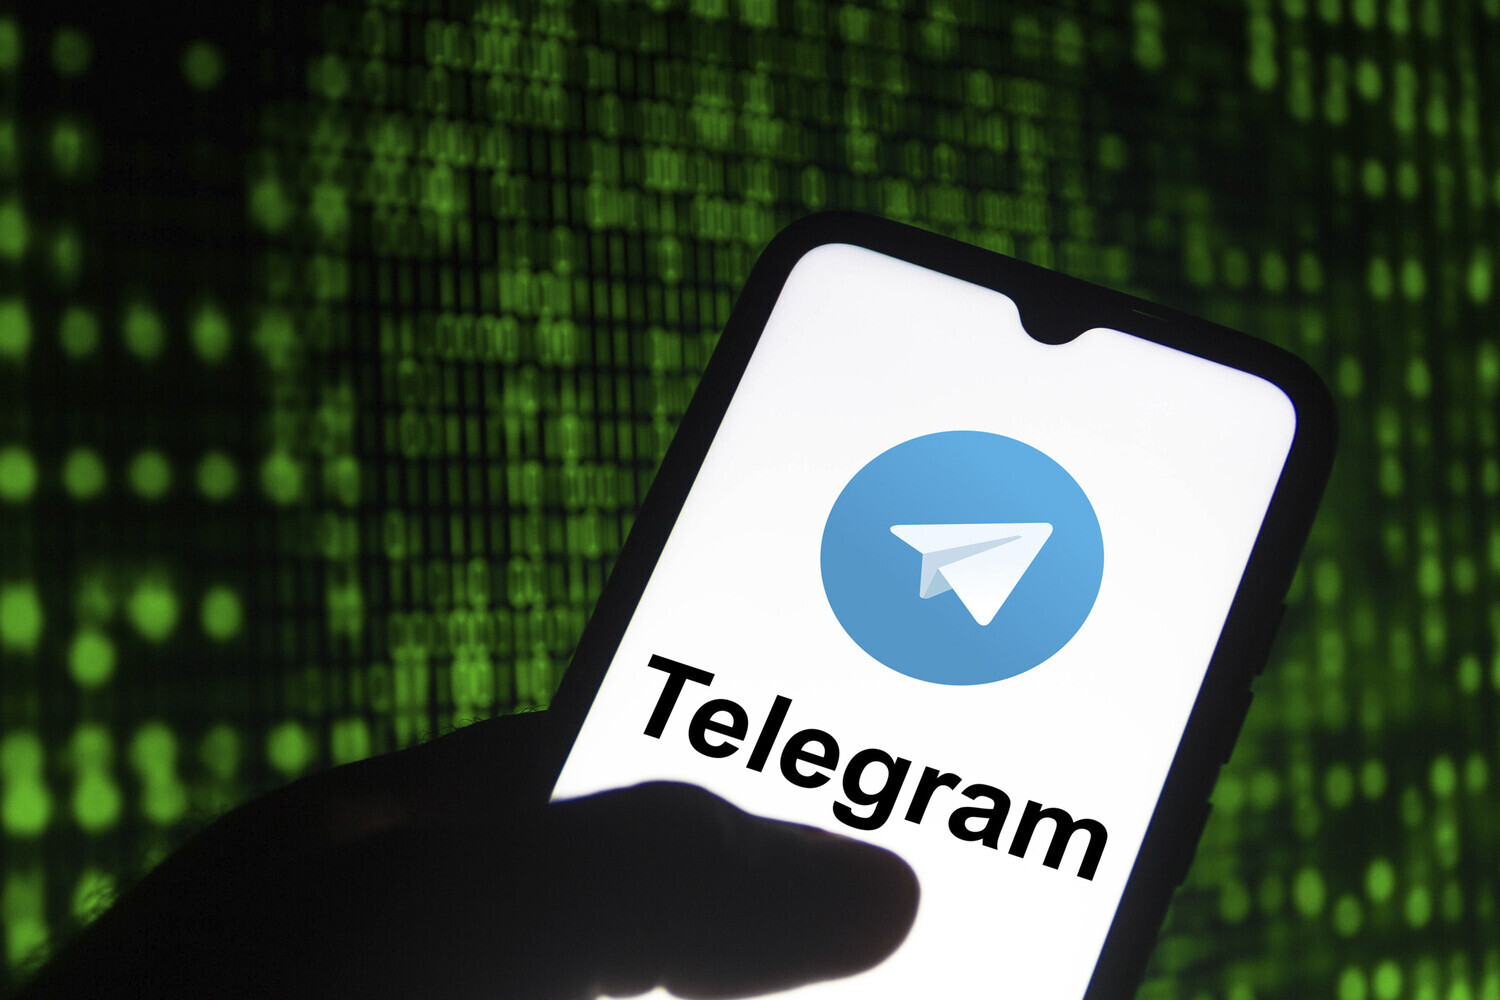        telegram- 